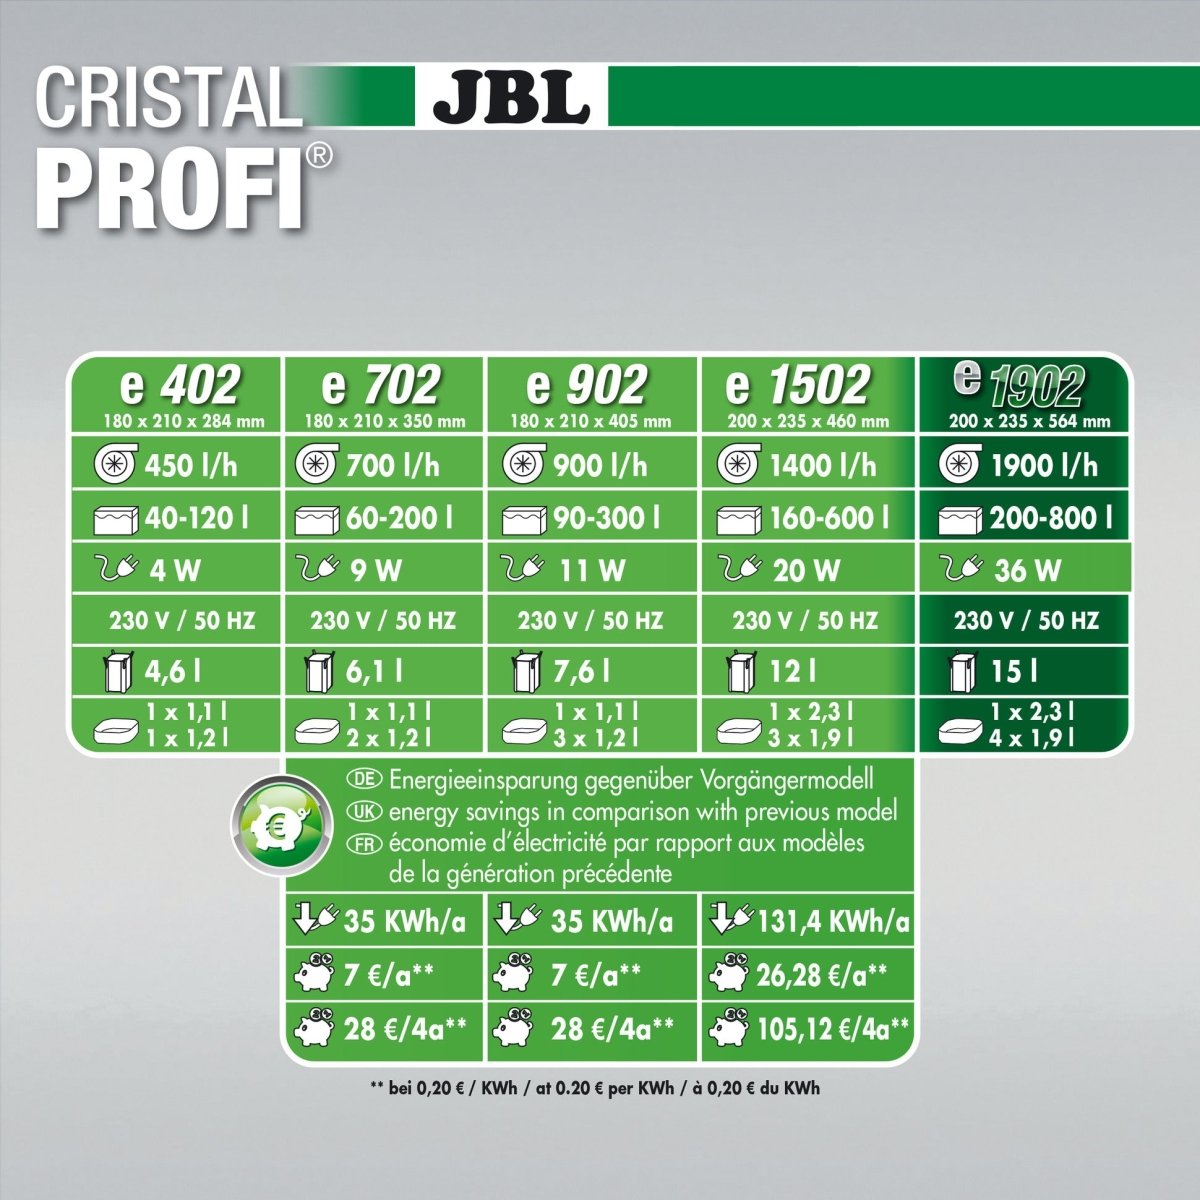 JBL CRISTALPROFI e1902 greenline - GarnelenTv-Shop